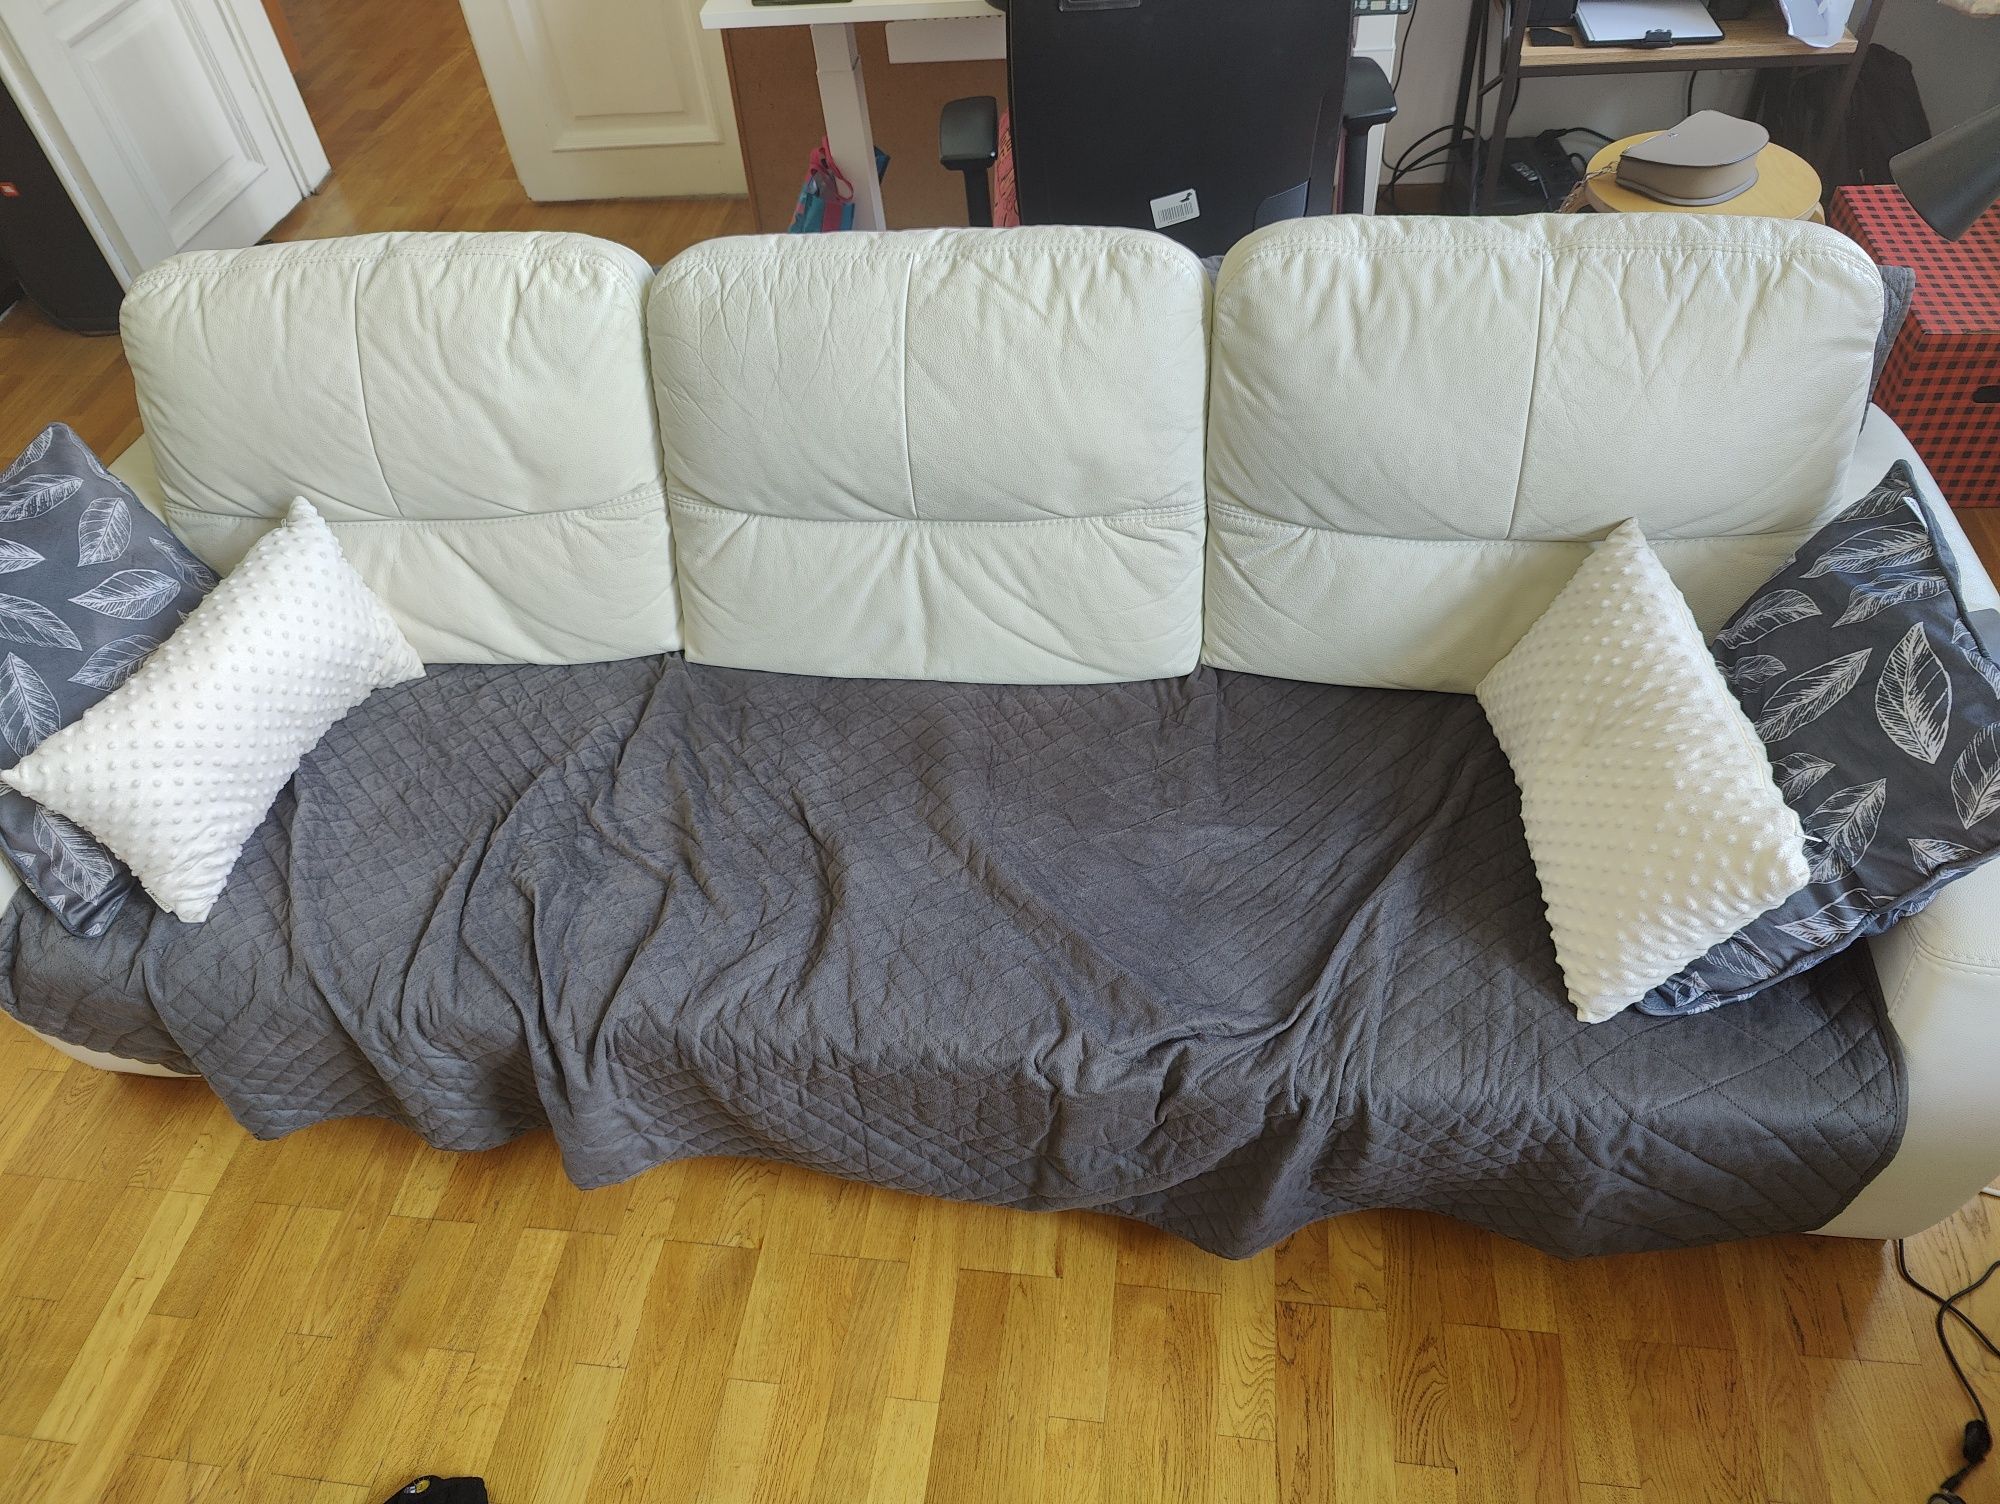 YUKA zestaw Agata Meble: sofa, fotel, 2 pufy